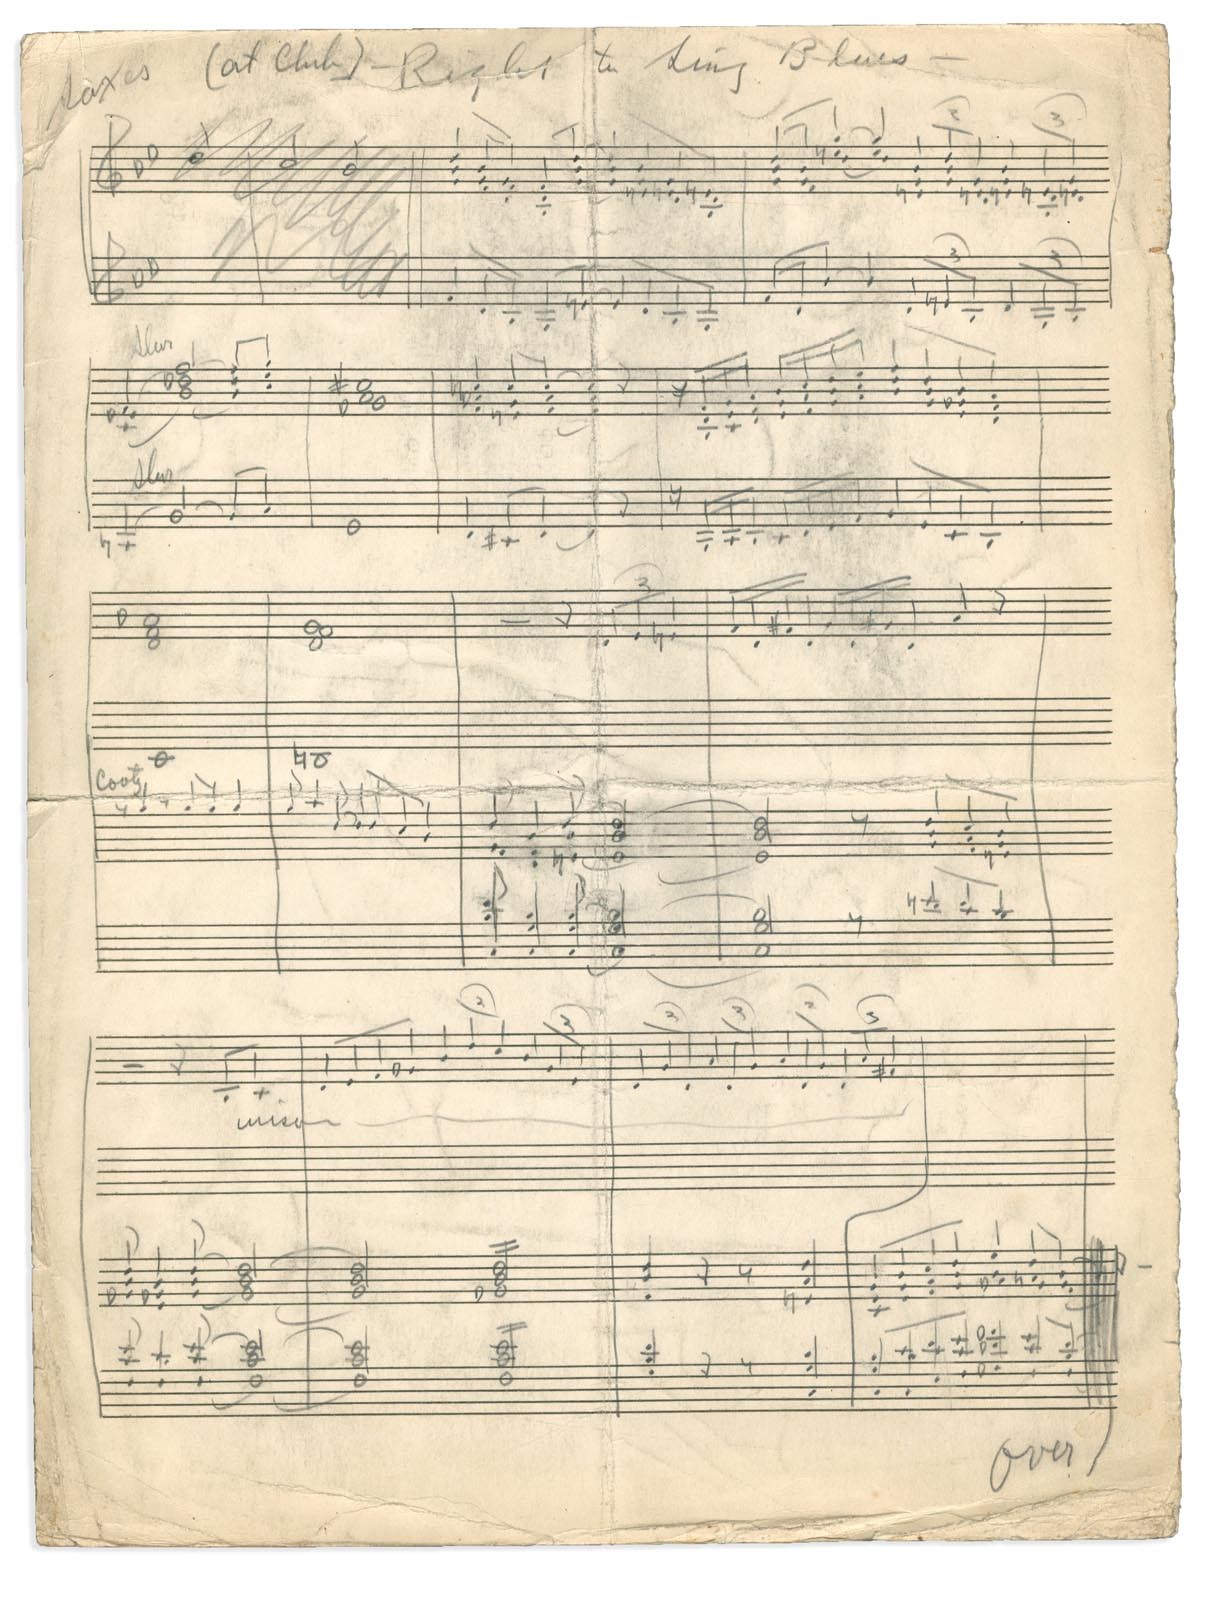 Duke Ellington "Got A Right To Sing The Blues" Handwritten Score